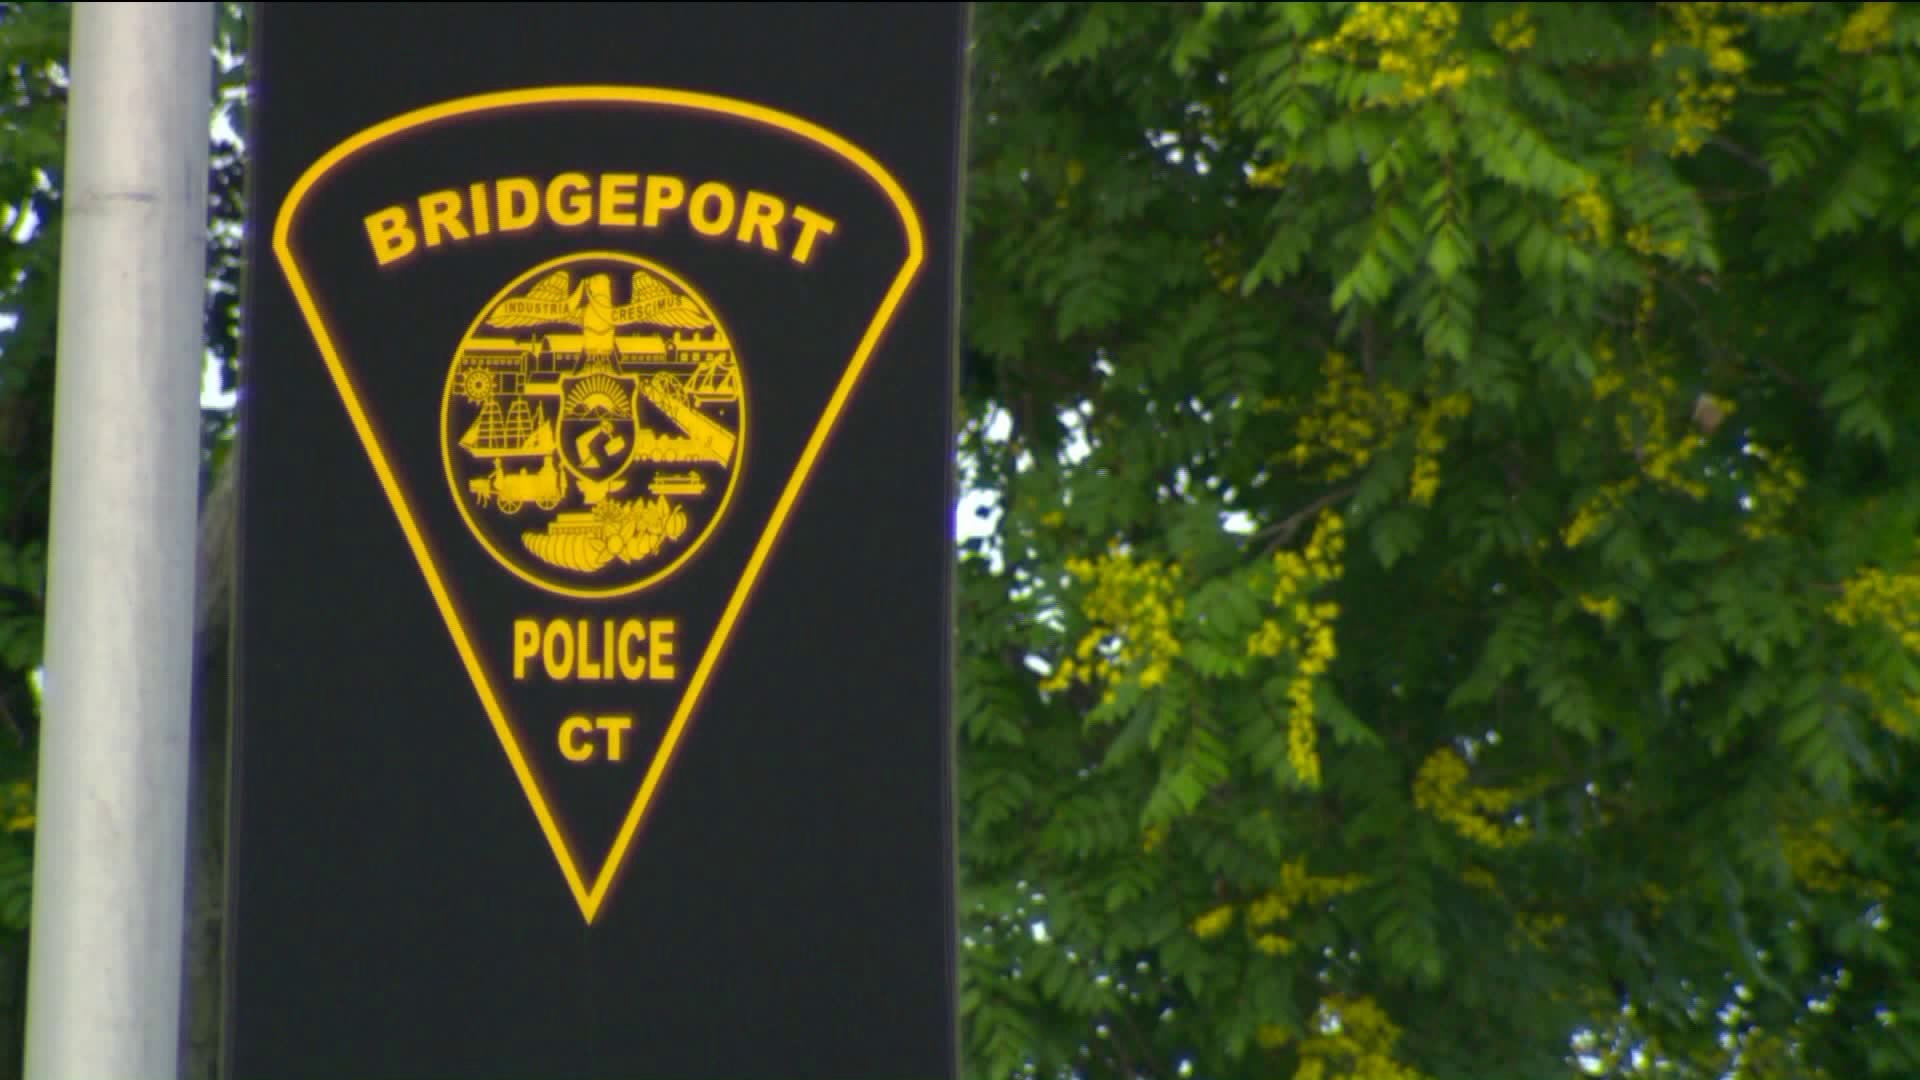 Working to reduce violence in Bridgeport